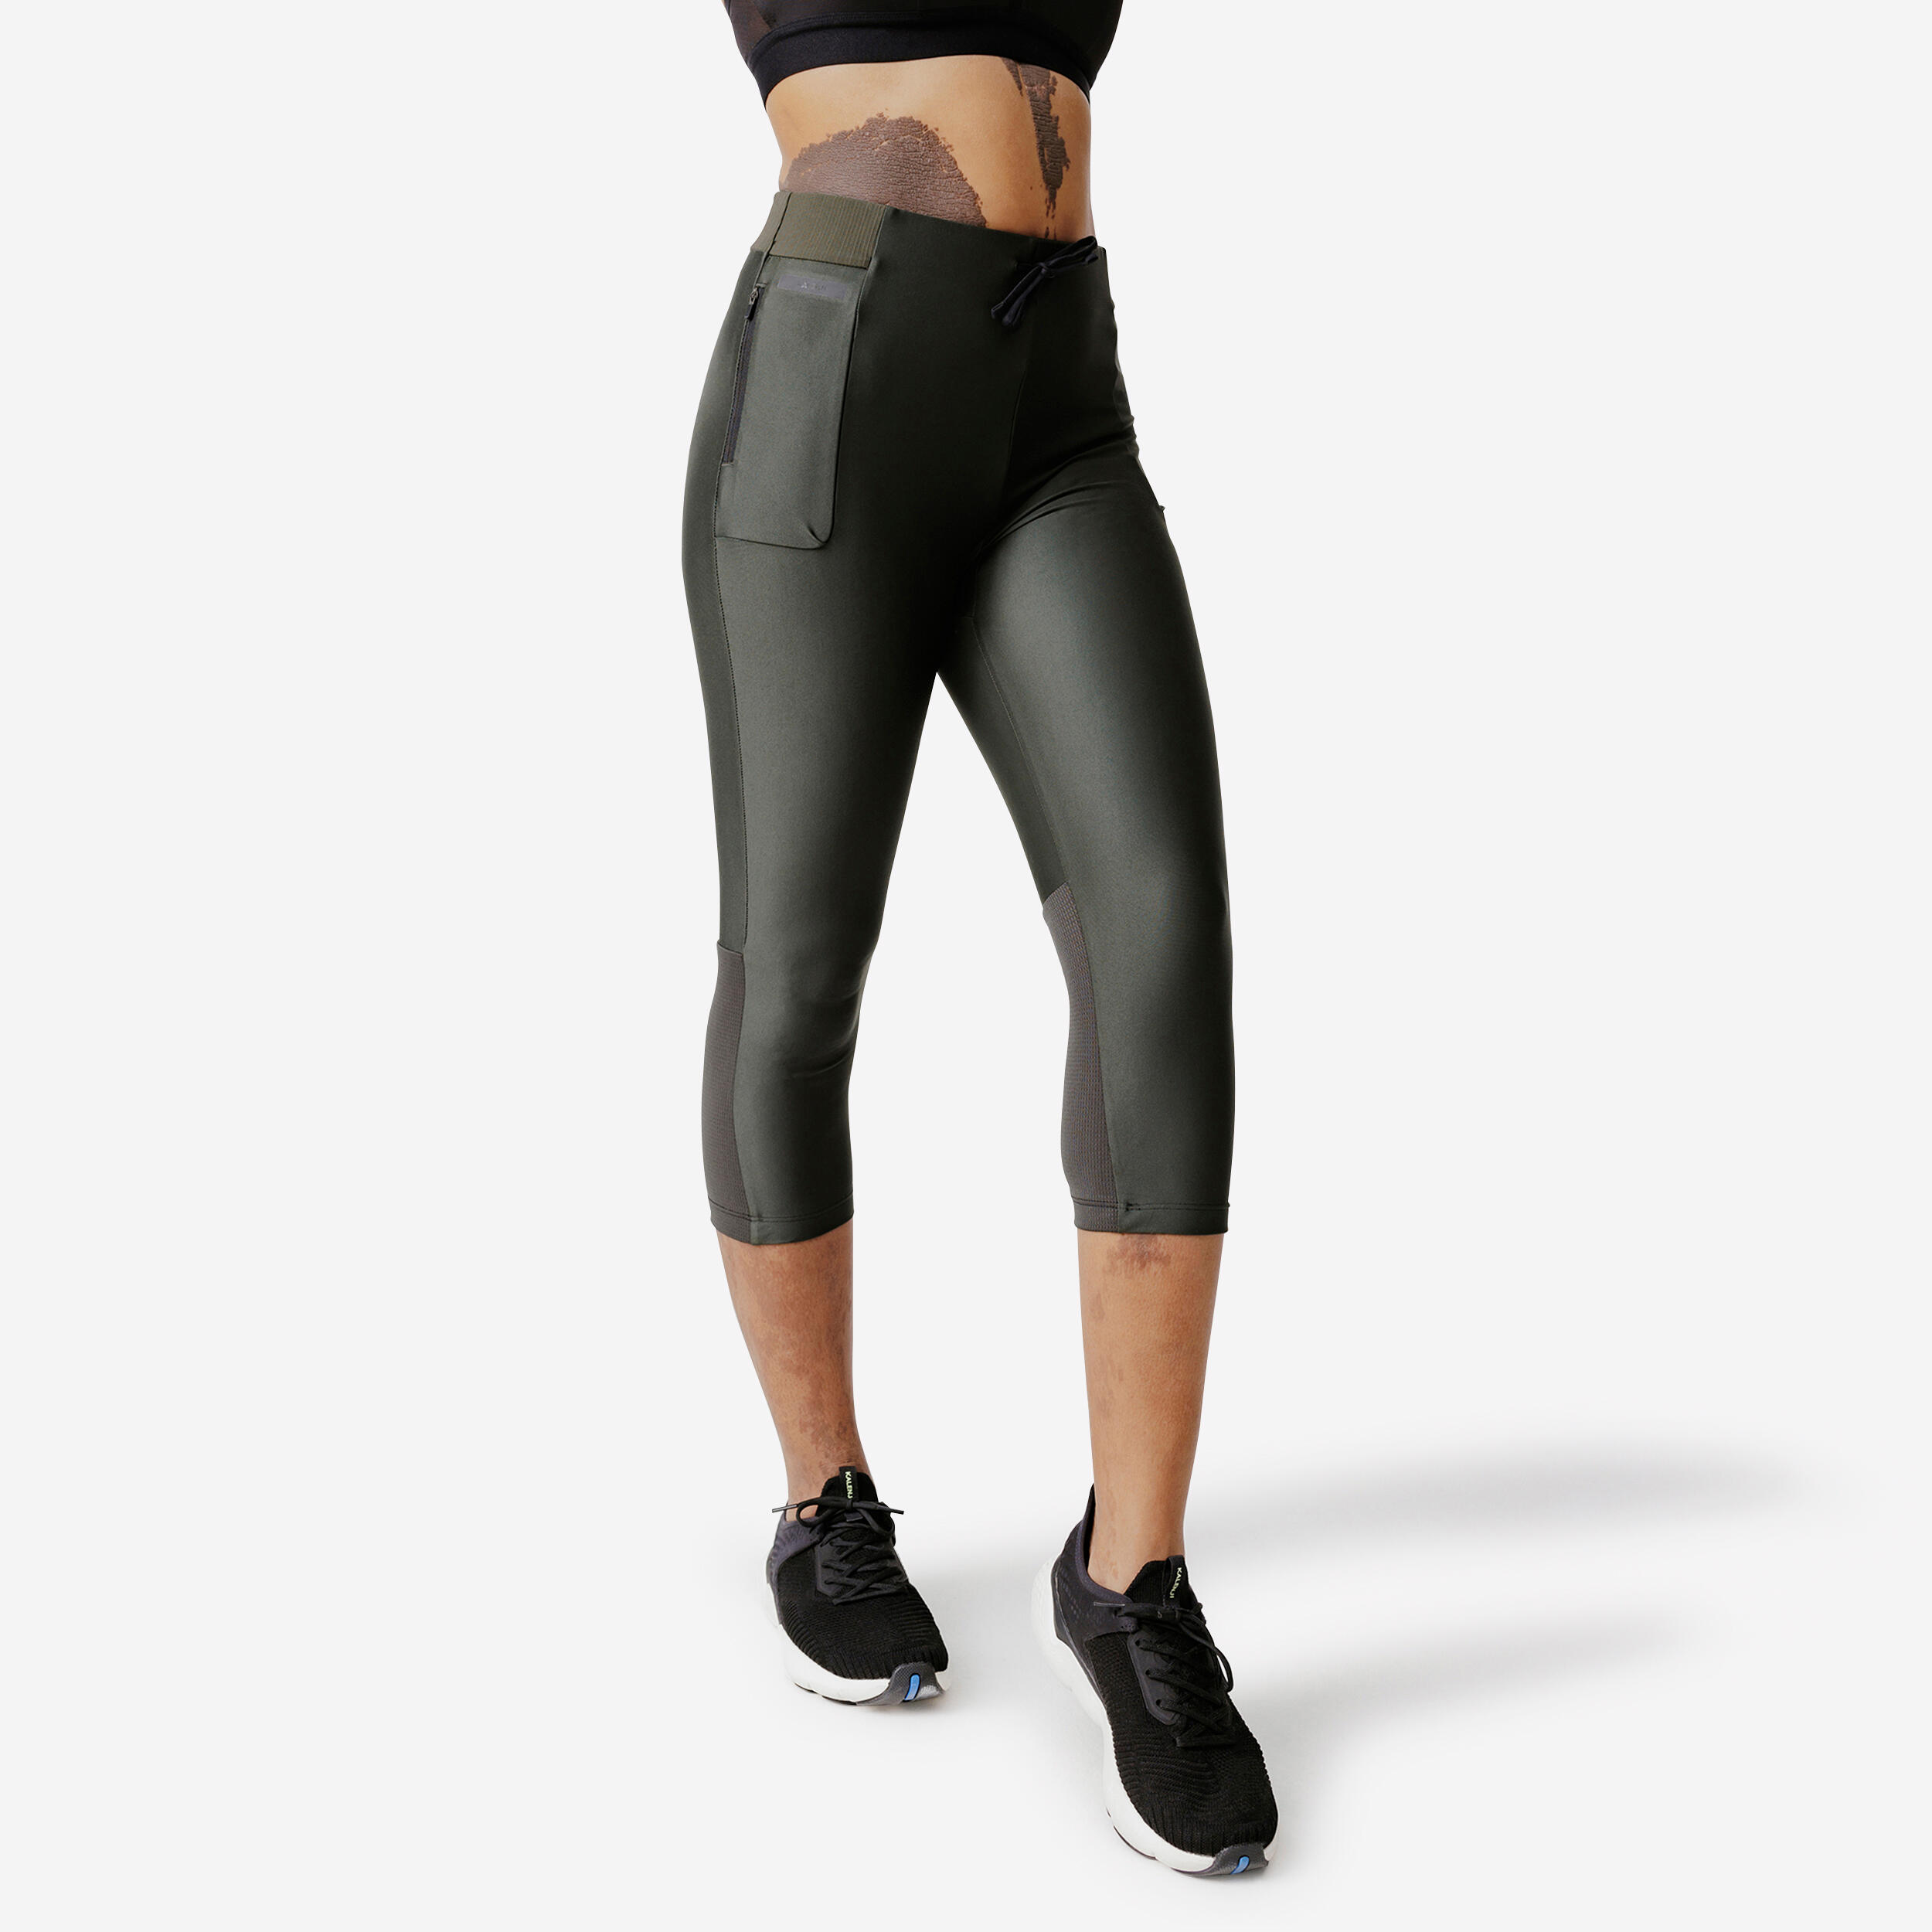 Warm+ Women's Running Warm Long Leggings - black with patterns